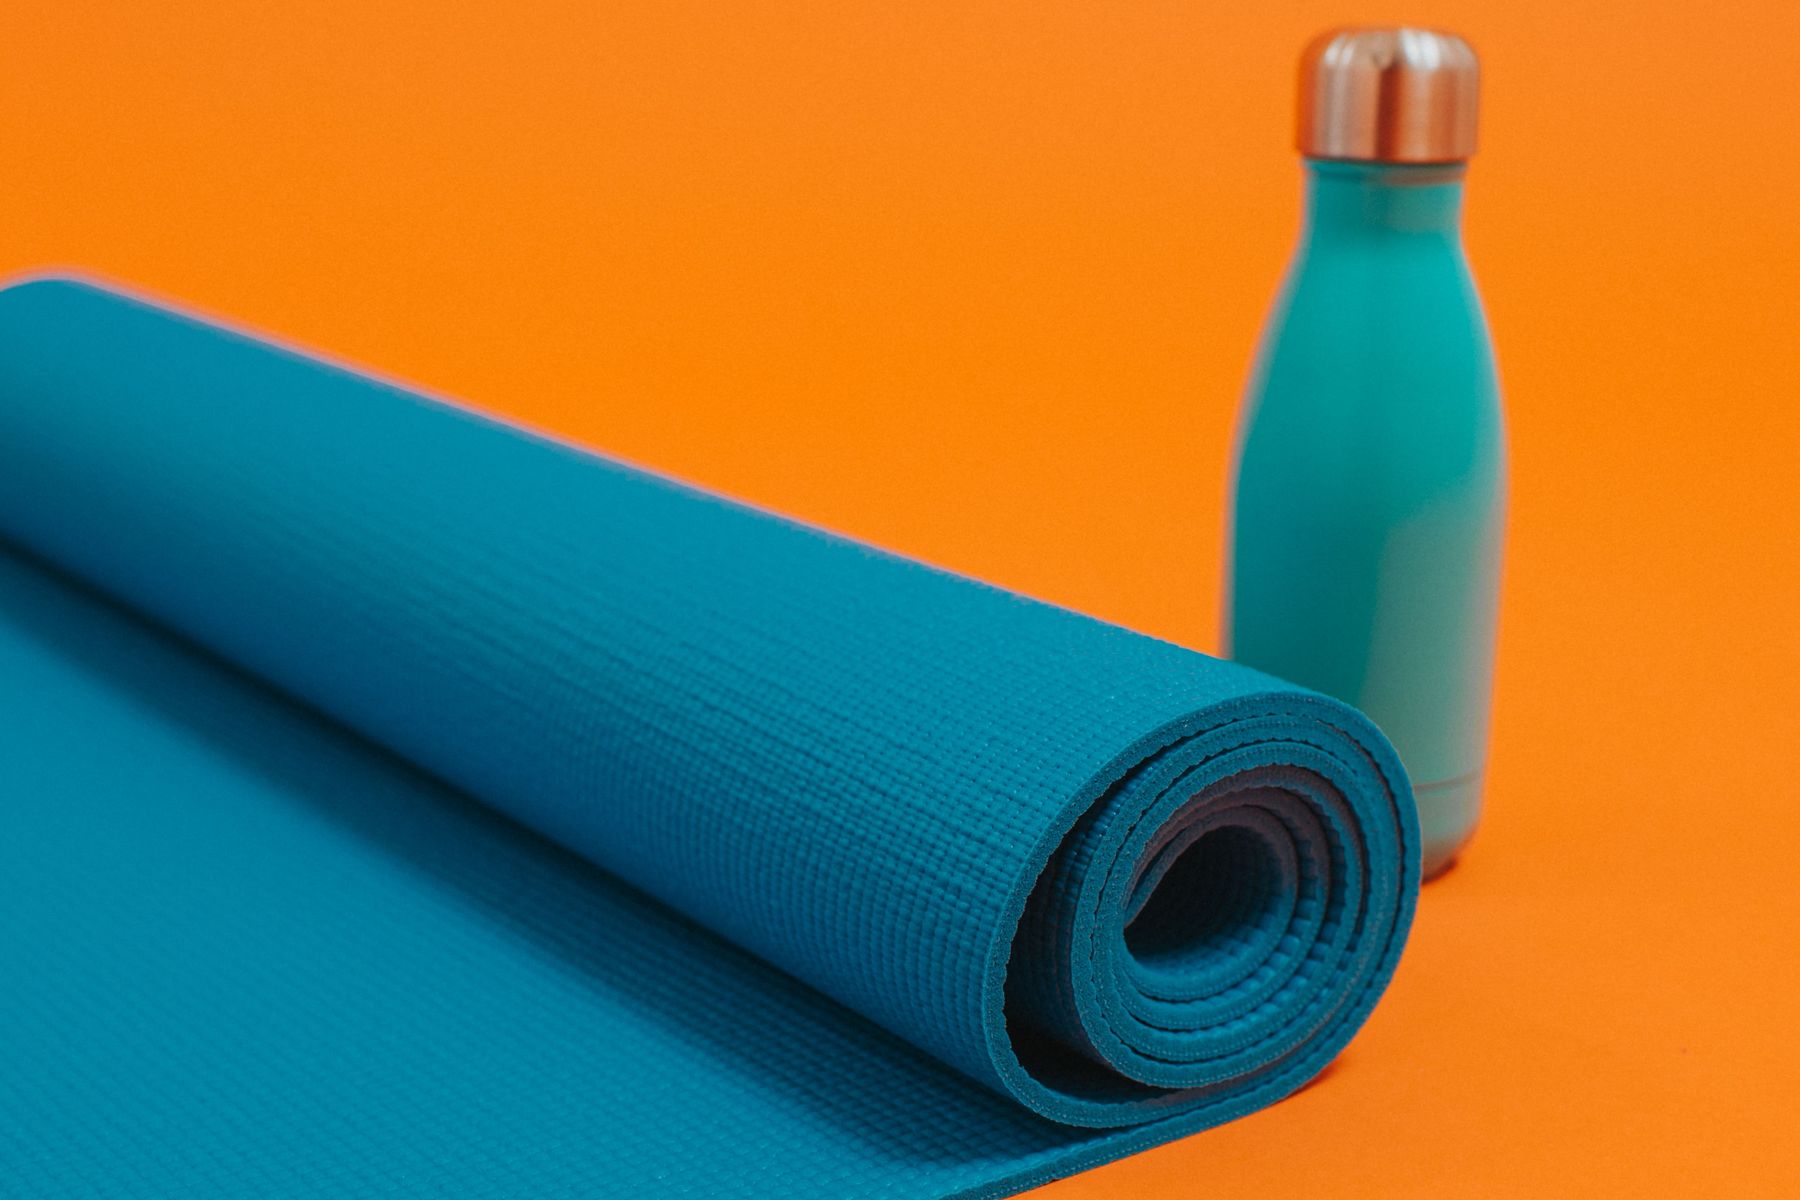 clean yoga mat